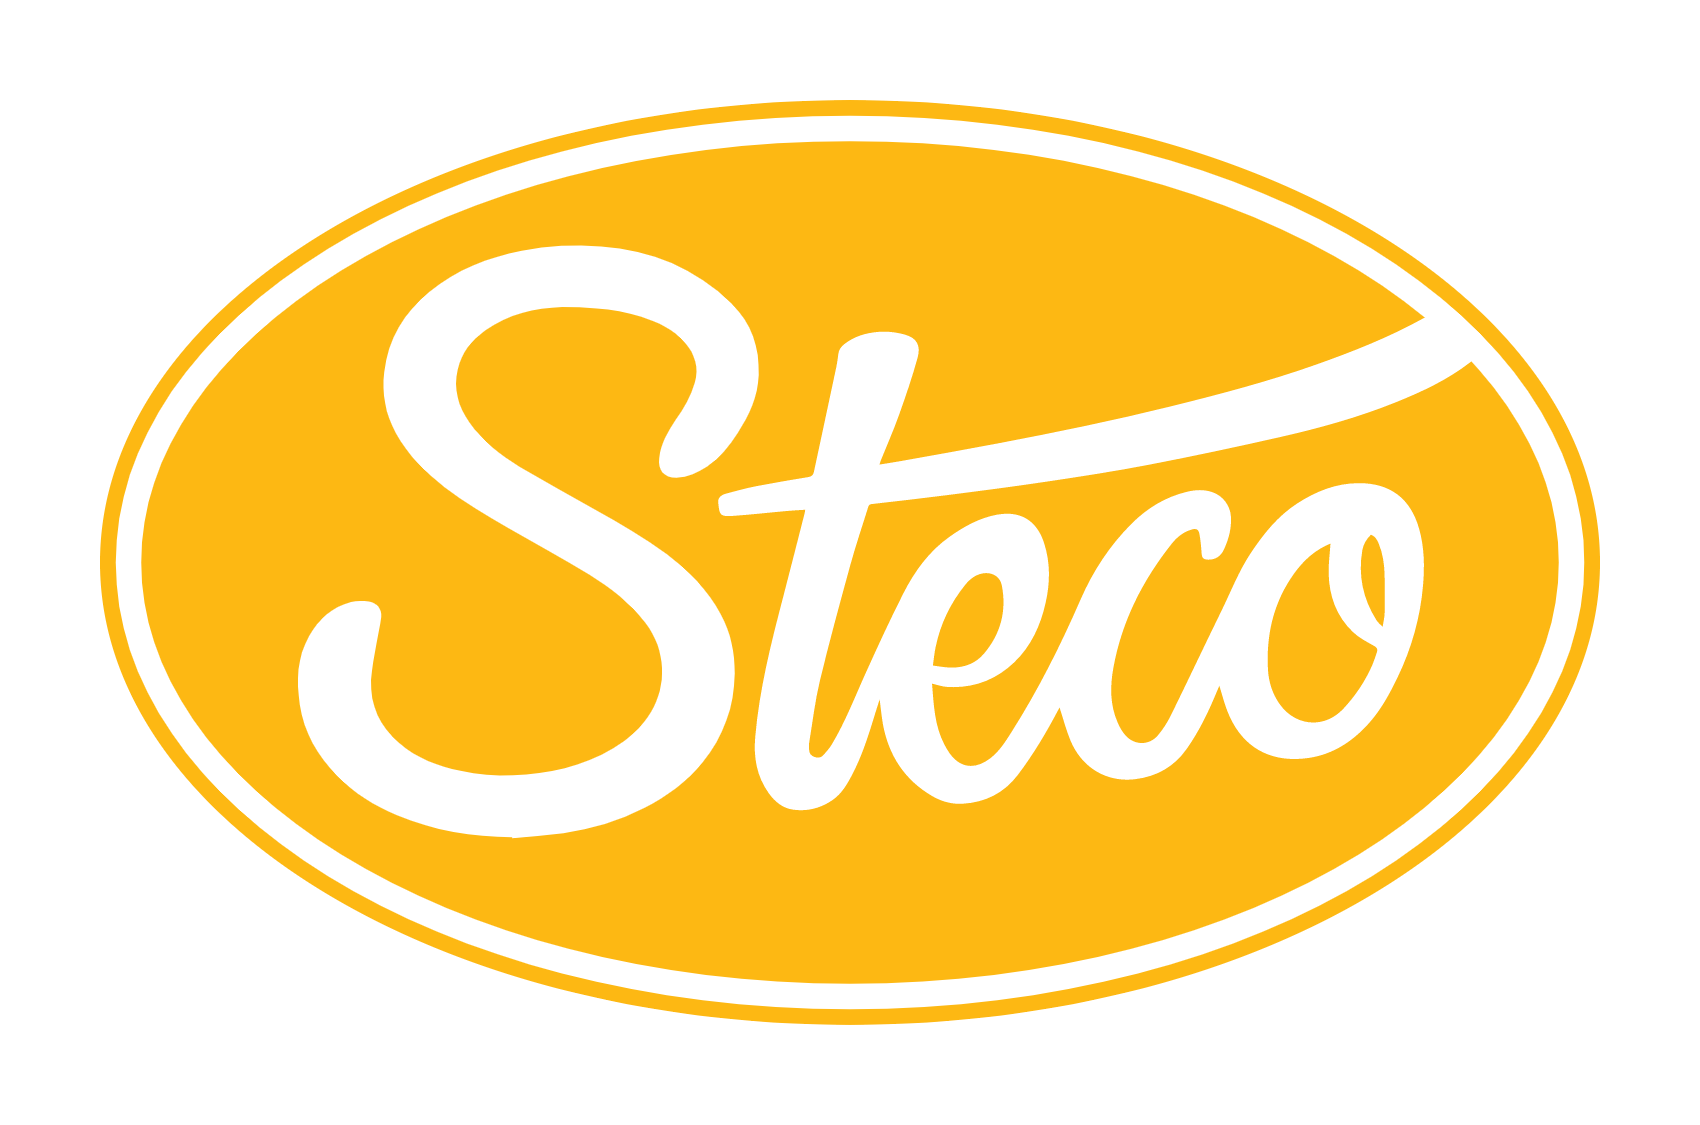 Steco - Brandless